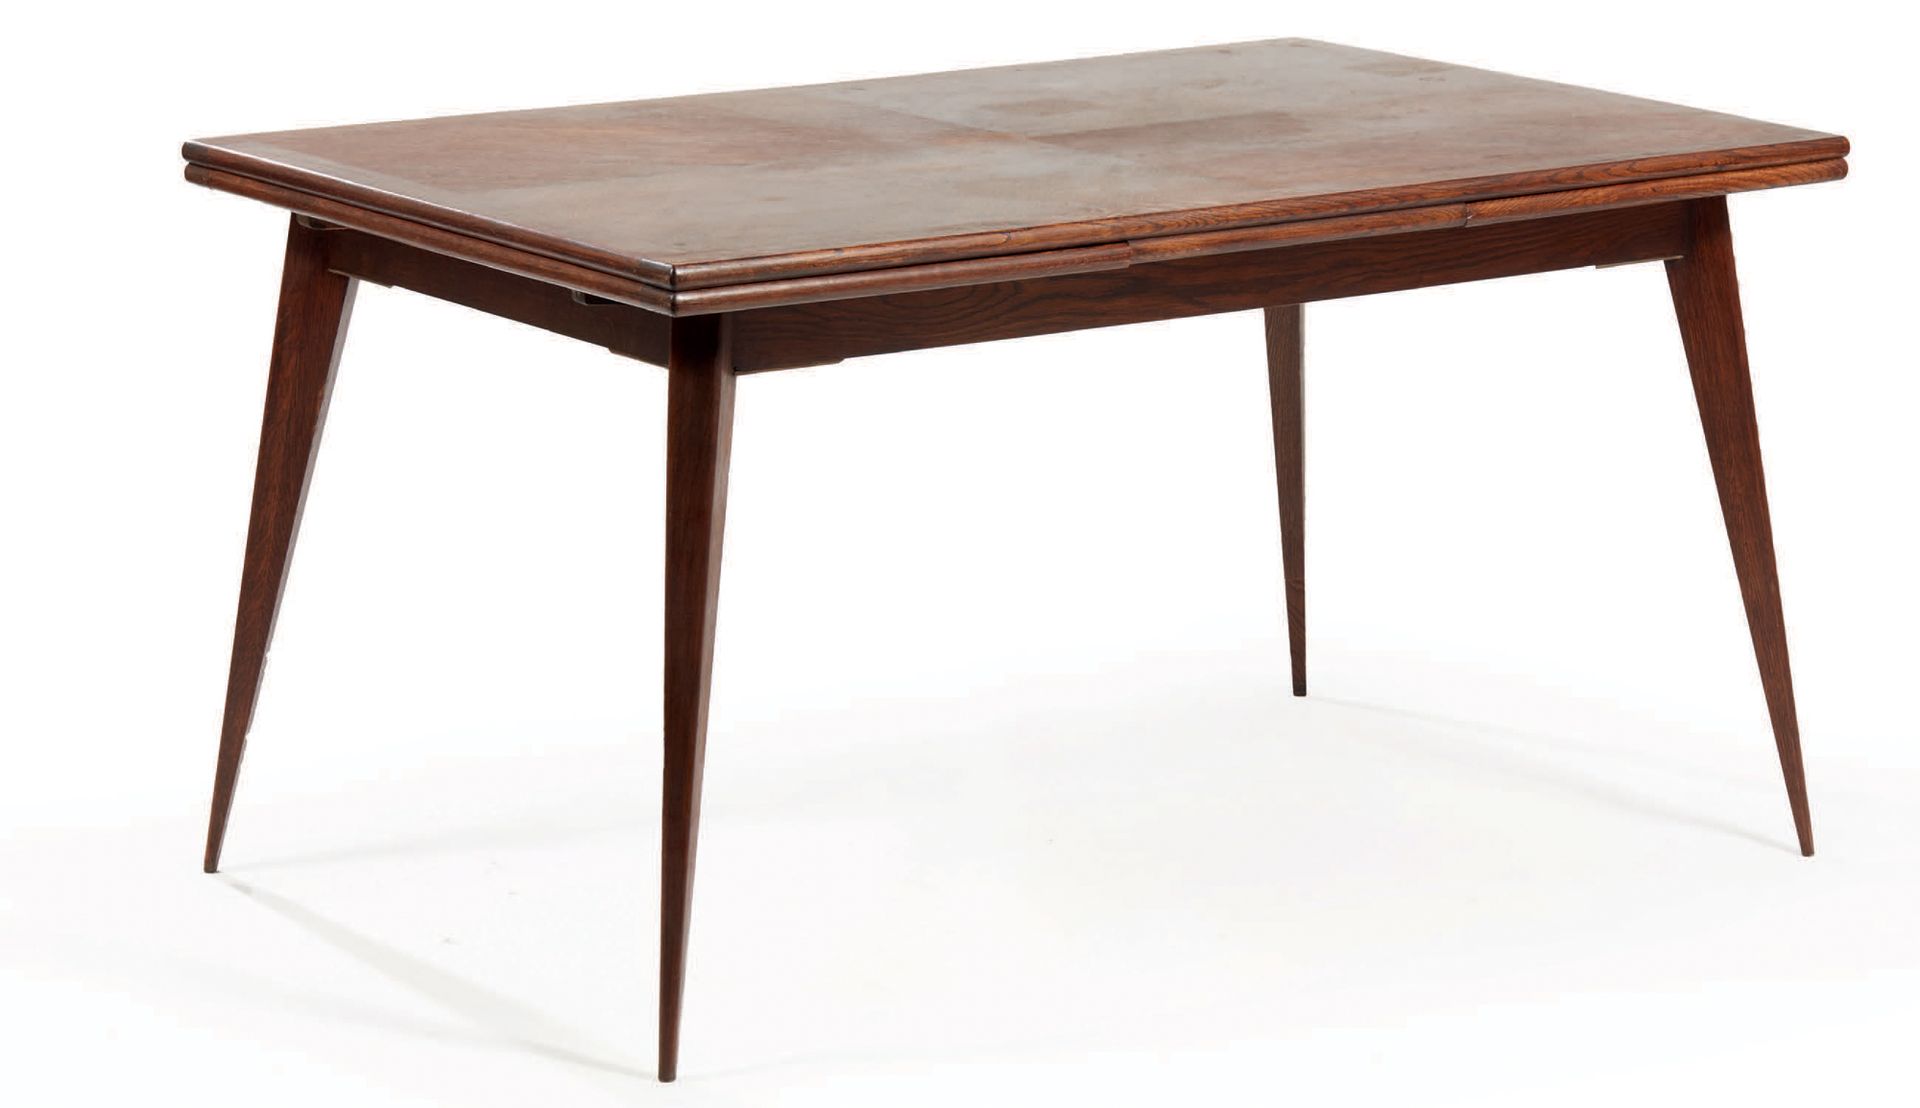 TRAVAIL des années 1950 
染色橡木长方形餐桌，带集成叶
高：75 宽：140 深：90 厘米
打开长度：240 厘米